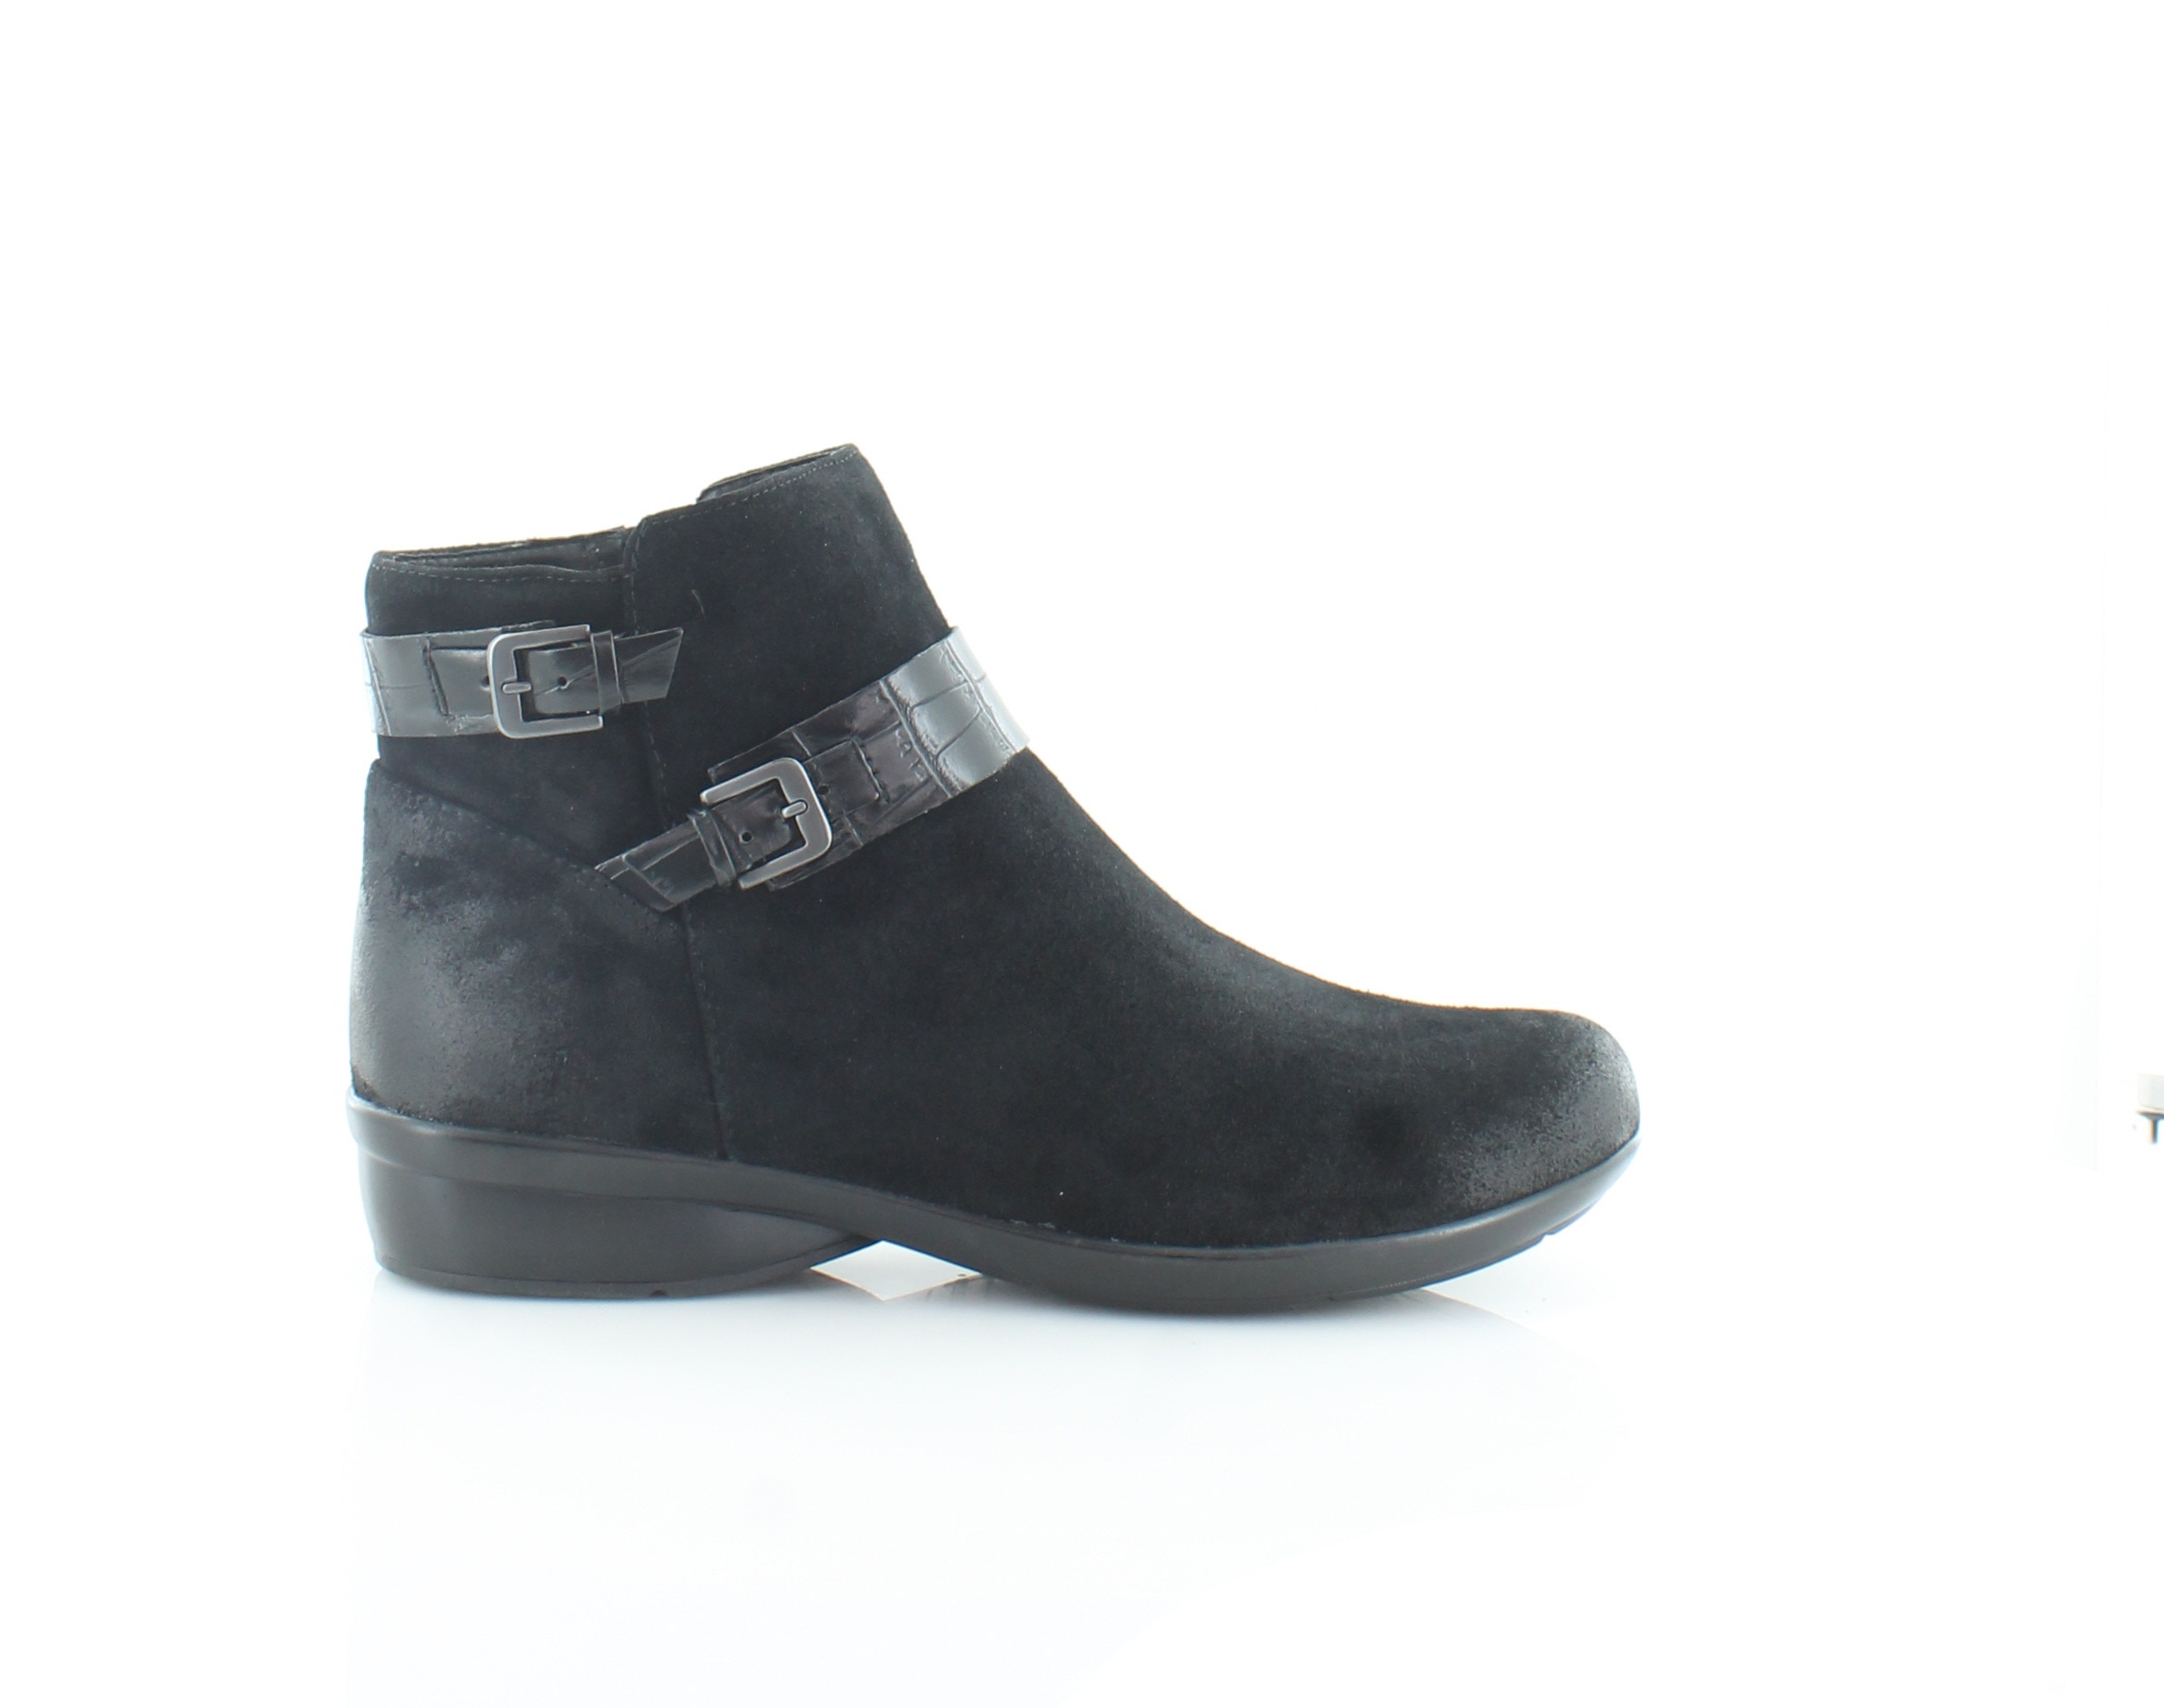 Naturalizer Cole Women's Boots Black | eBay